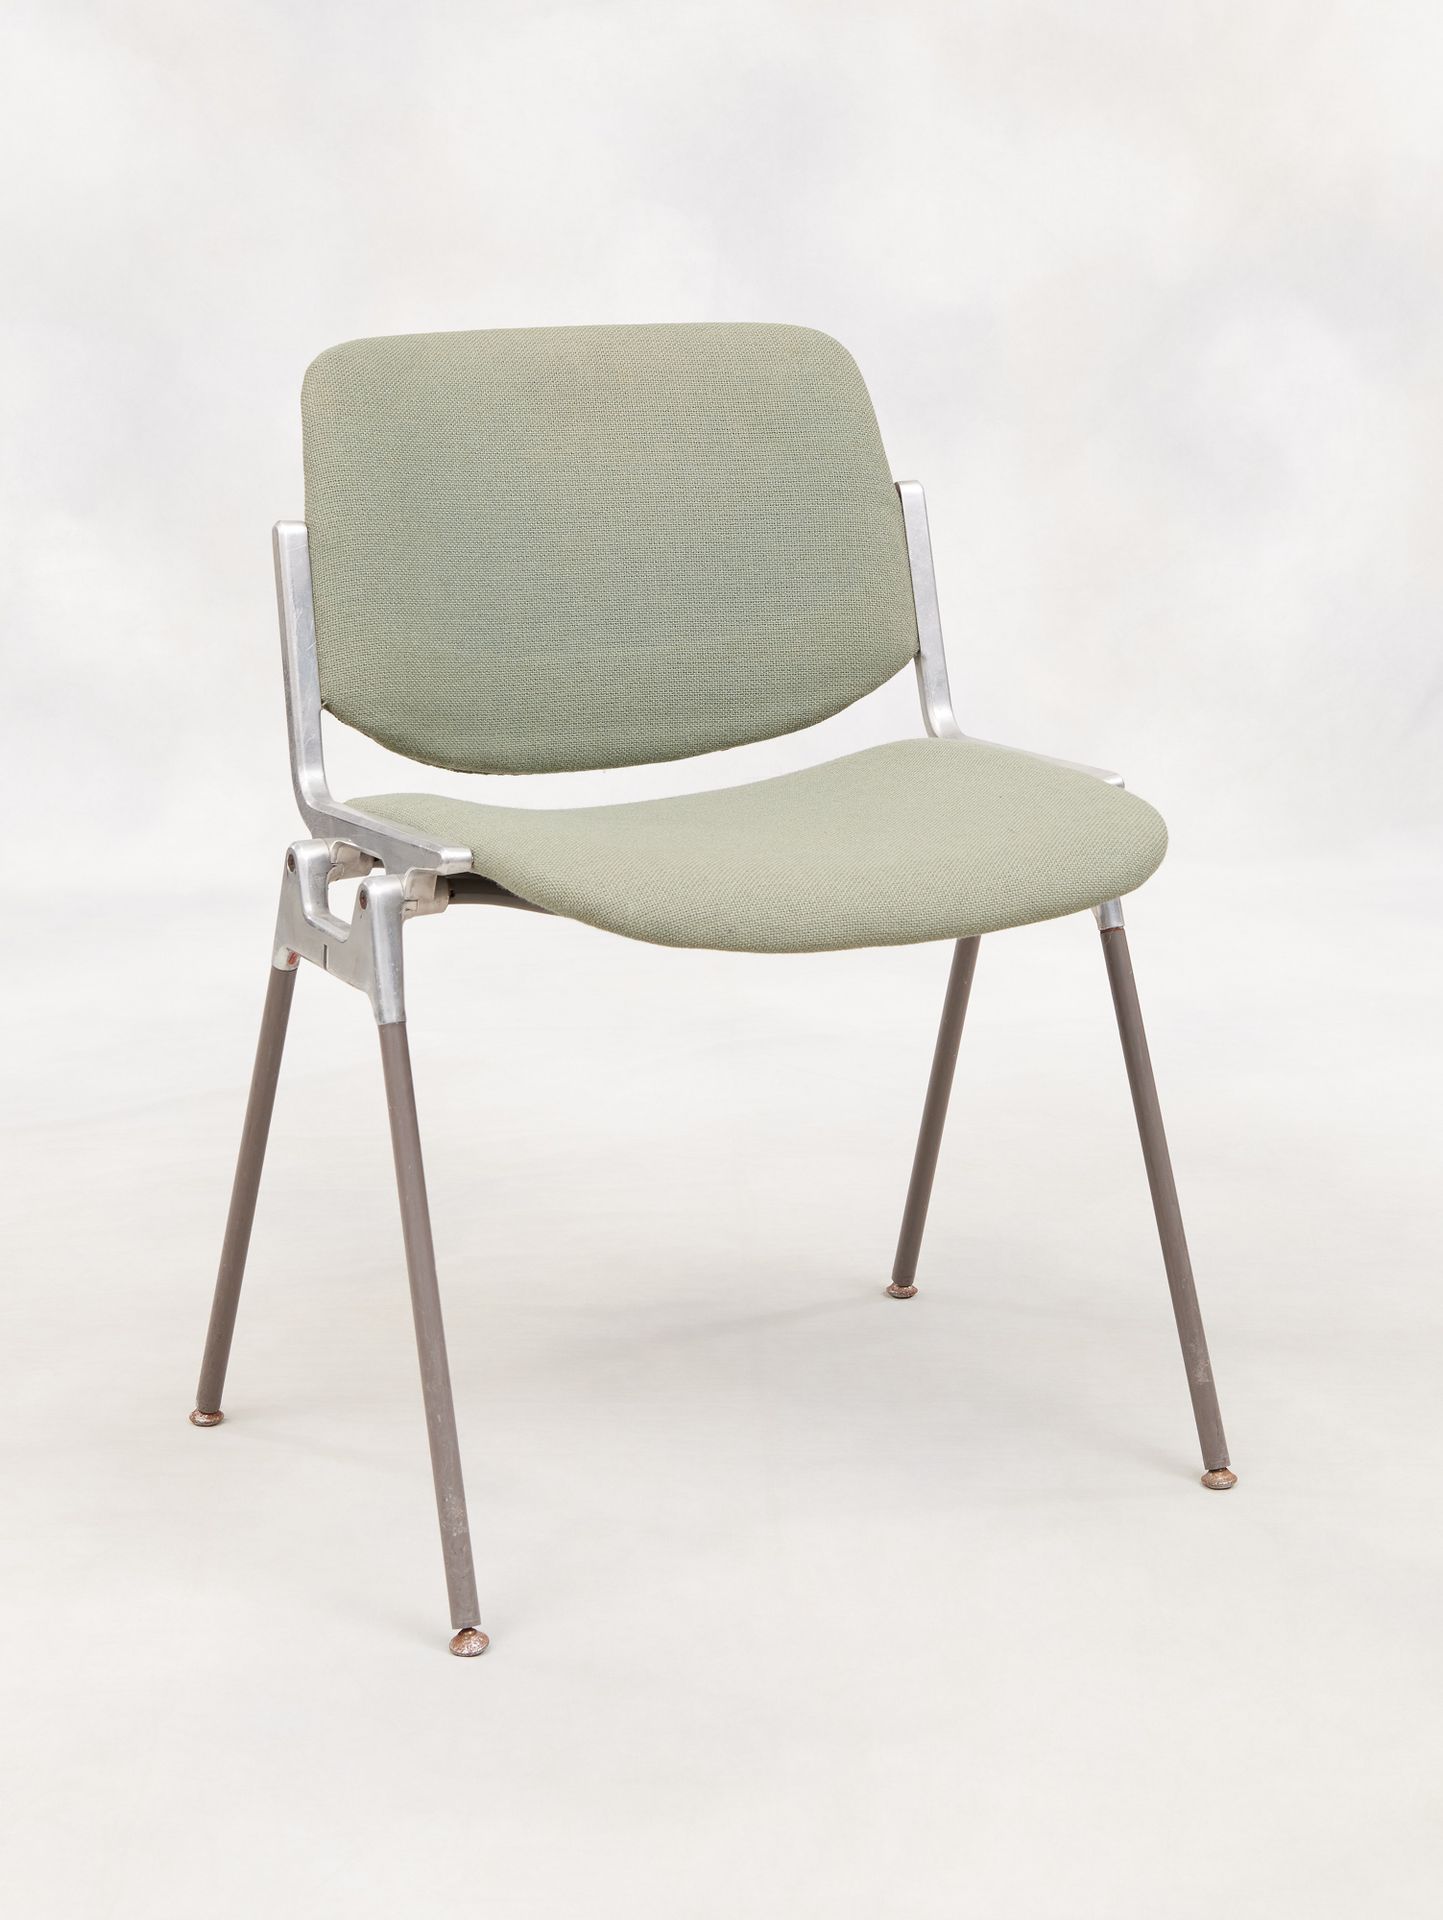 Design italien Giancarlo Piretti circa 1950. 家具：六把镀铬金属椅子组成的套房。

卡斯特利版。